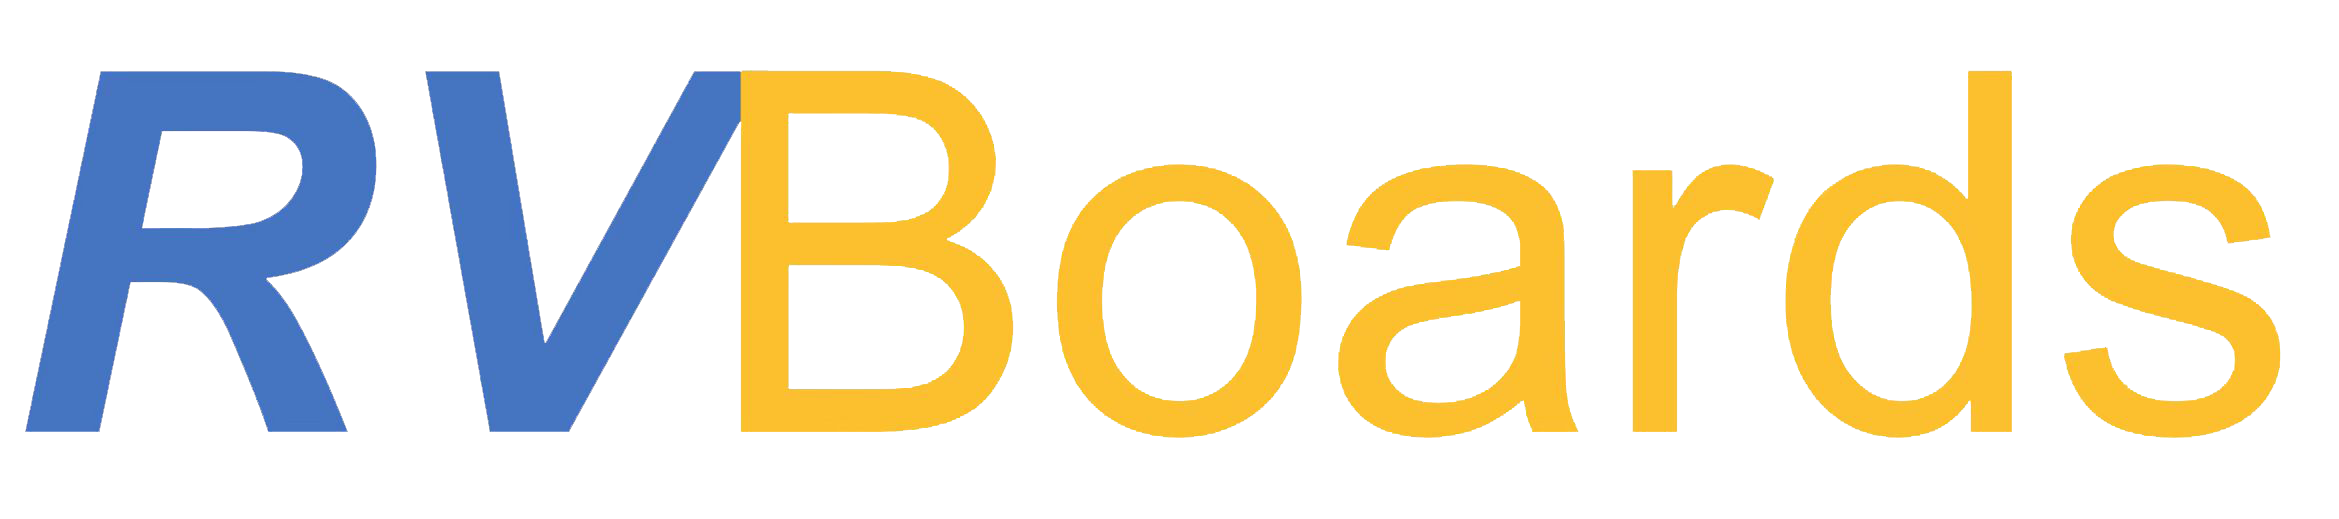 expoint-logo